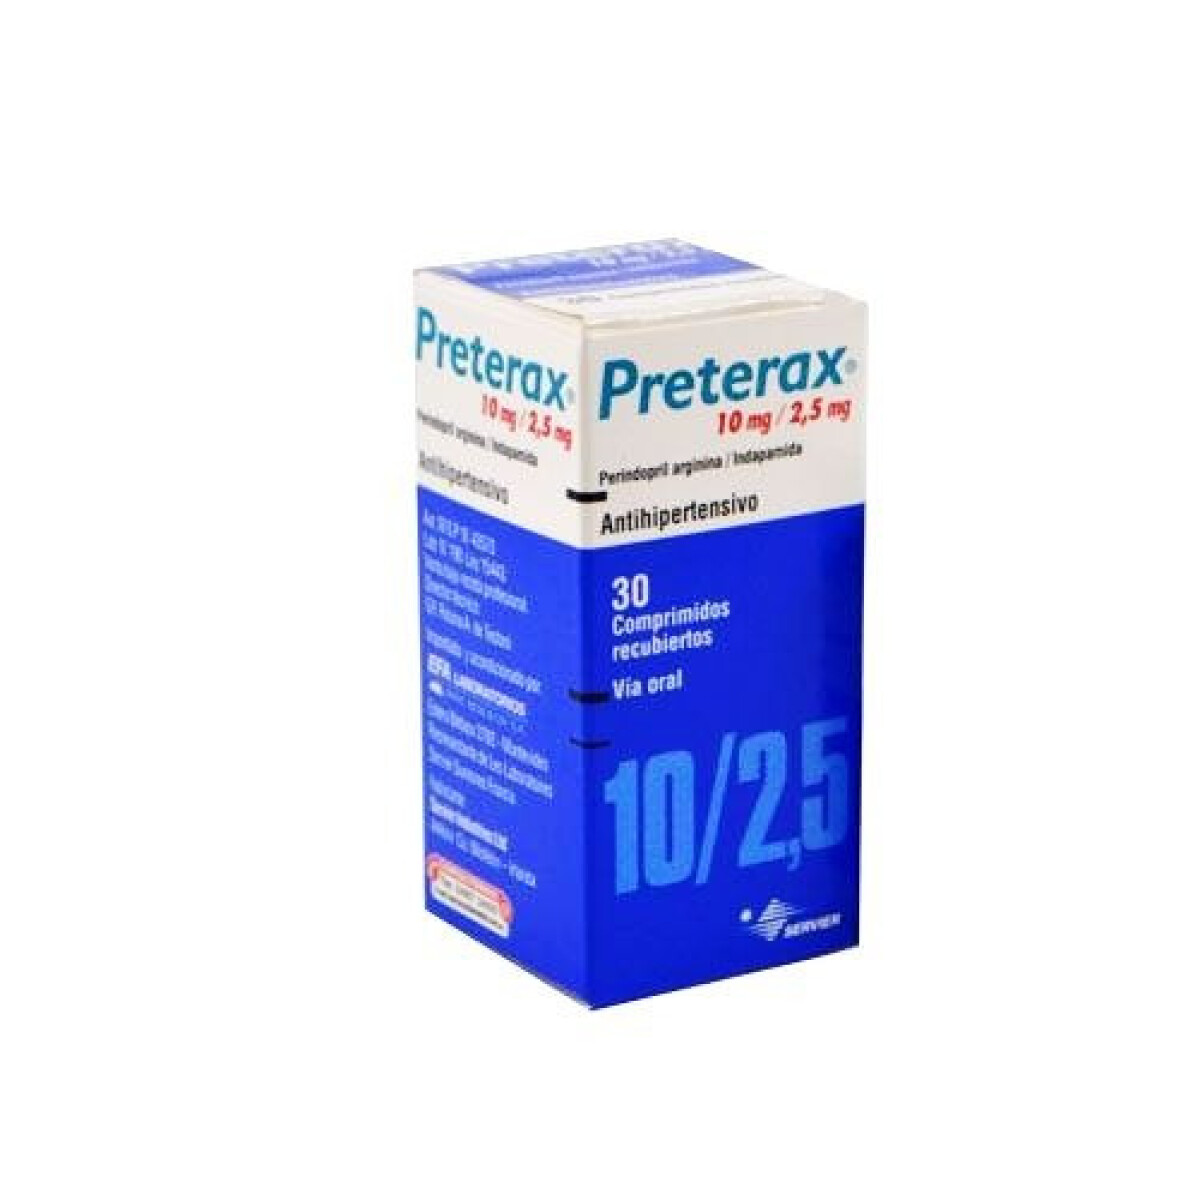 Preterax 10 Mg./2.5 Mg. 30 Comp. 